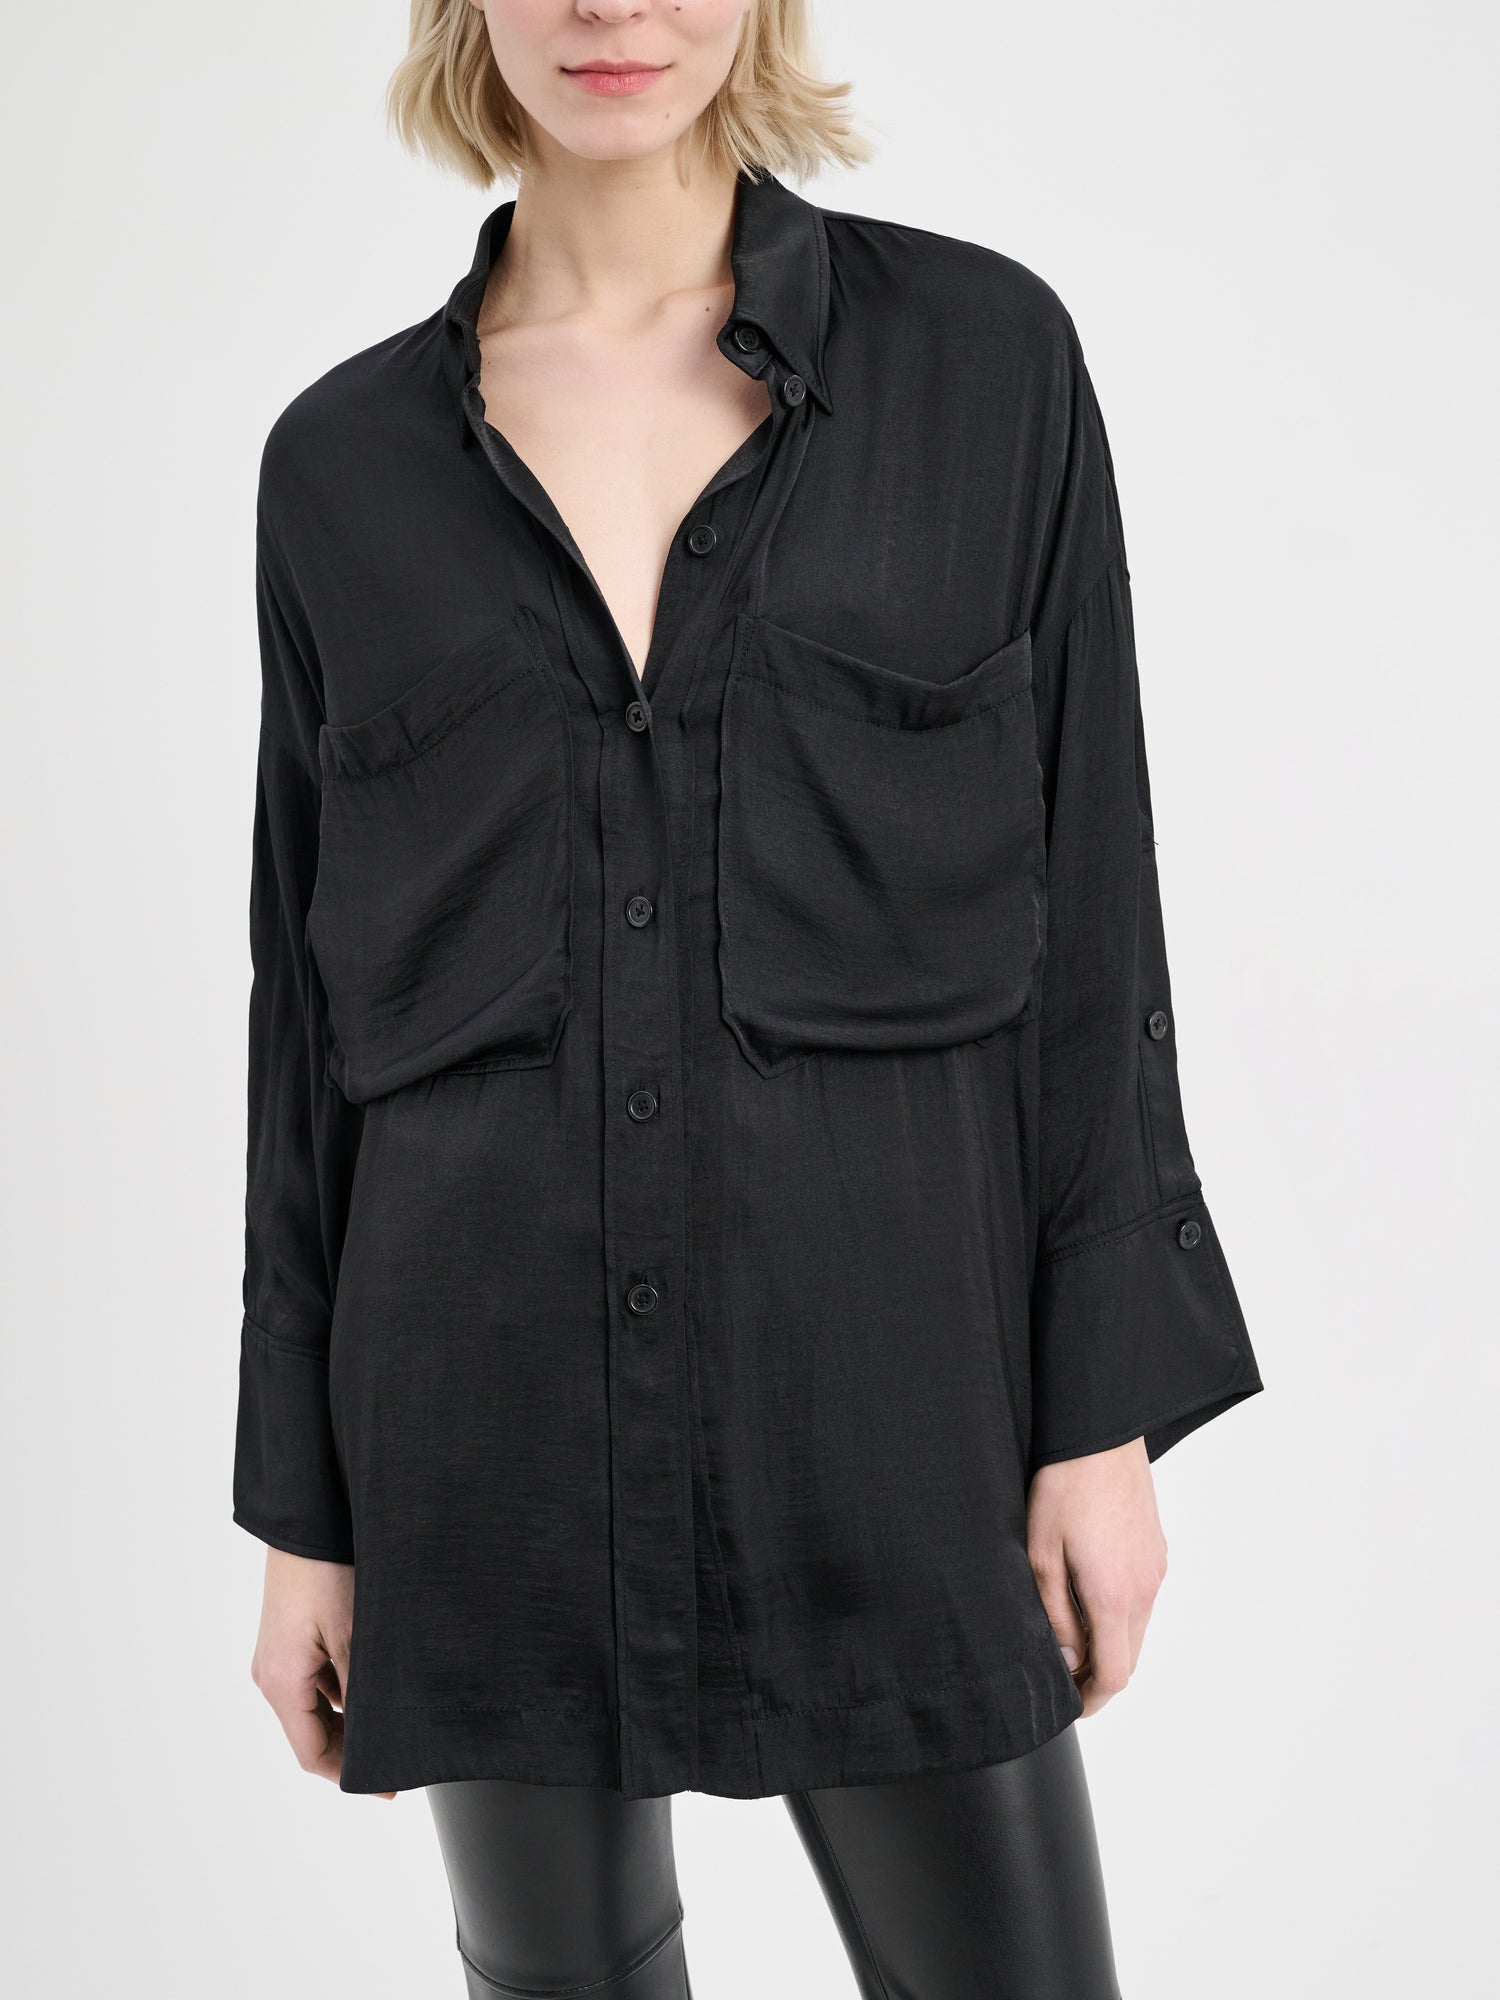 TRANSPARENT FANTASY blouse, black